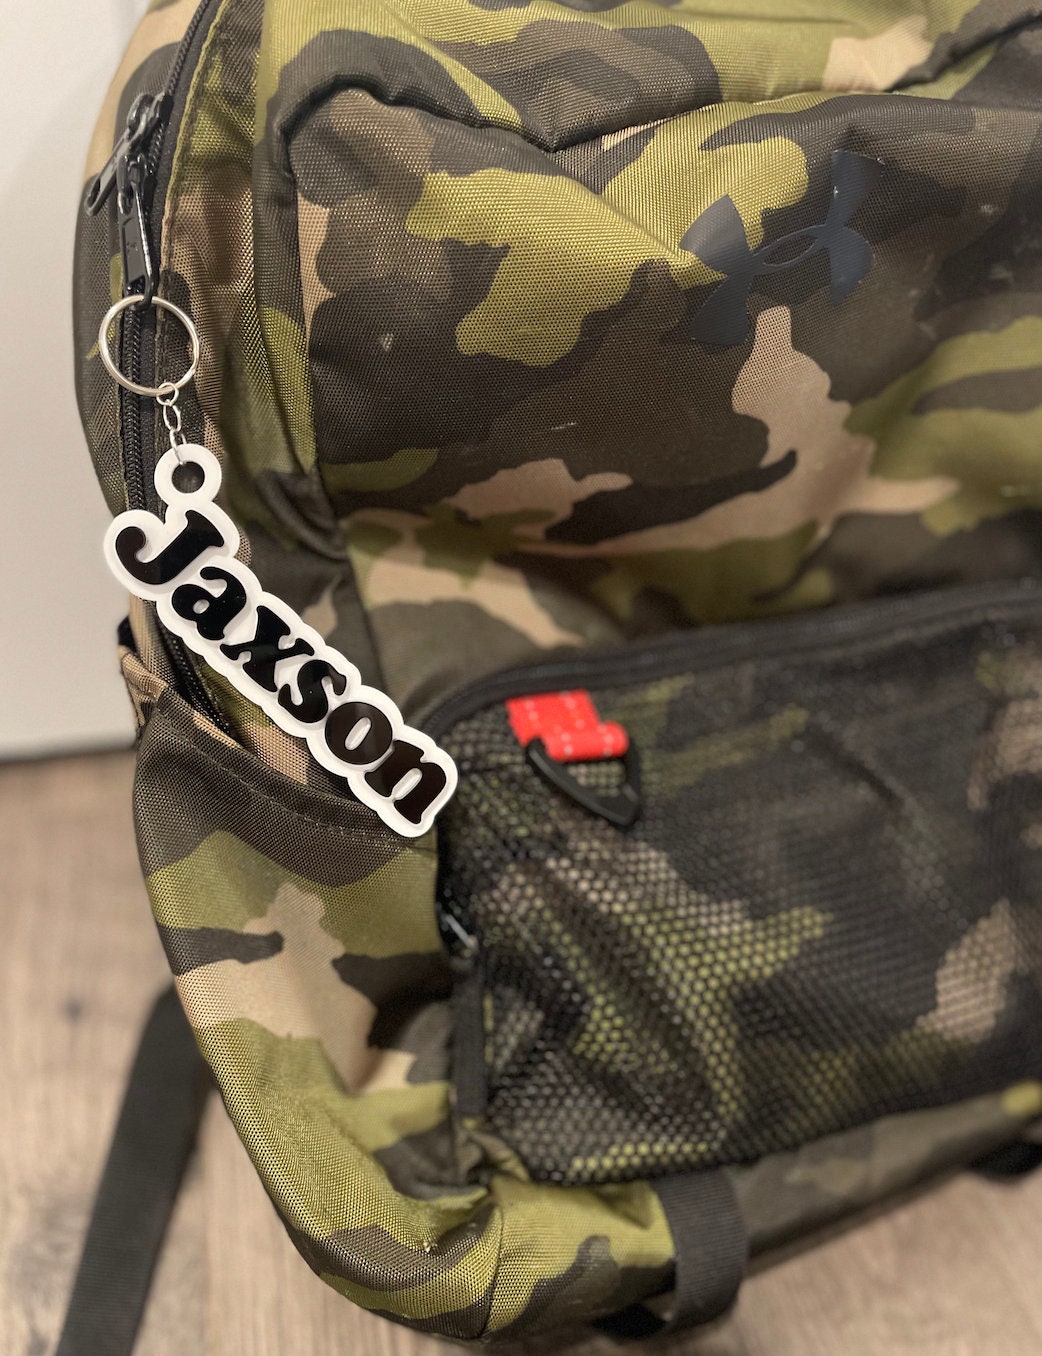 Acrylic Personalized Keychain, Personalized Backpack, Backpack Tag, Acrylic Tag, Name Keychain, Acrylic Name, Layered Keychain